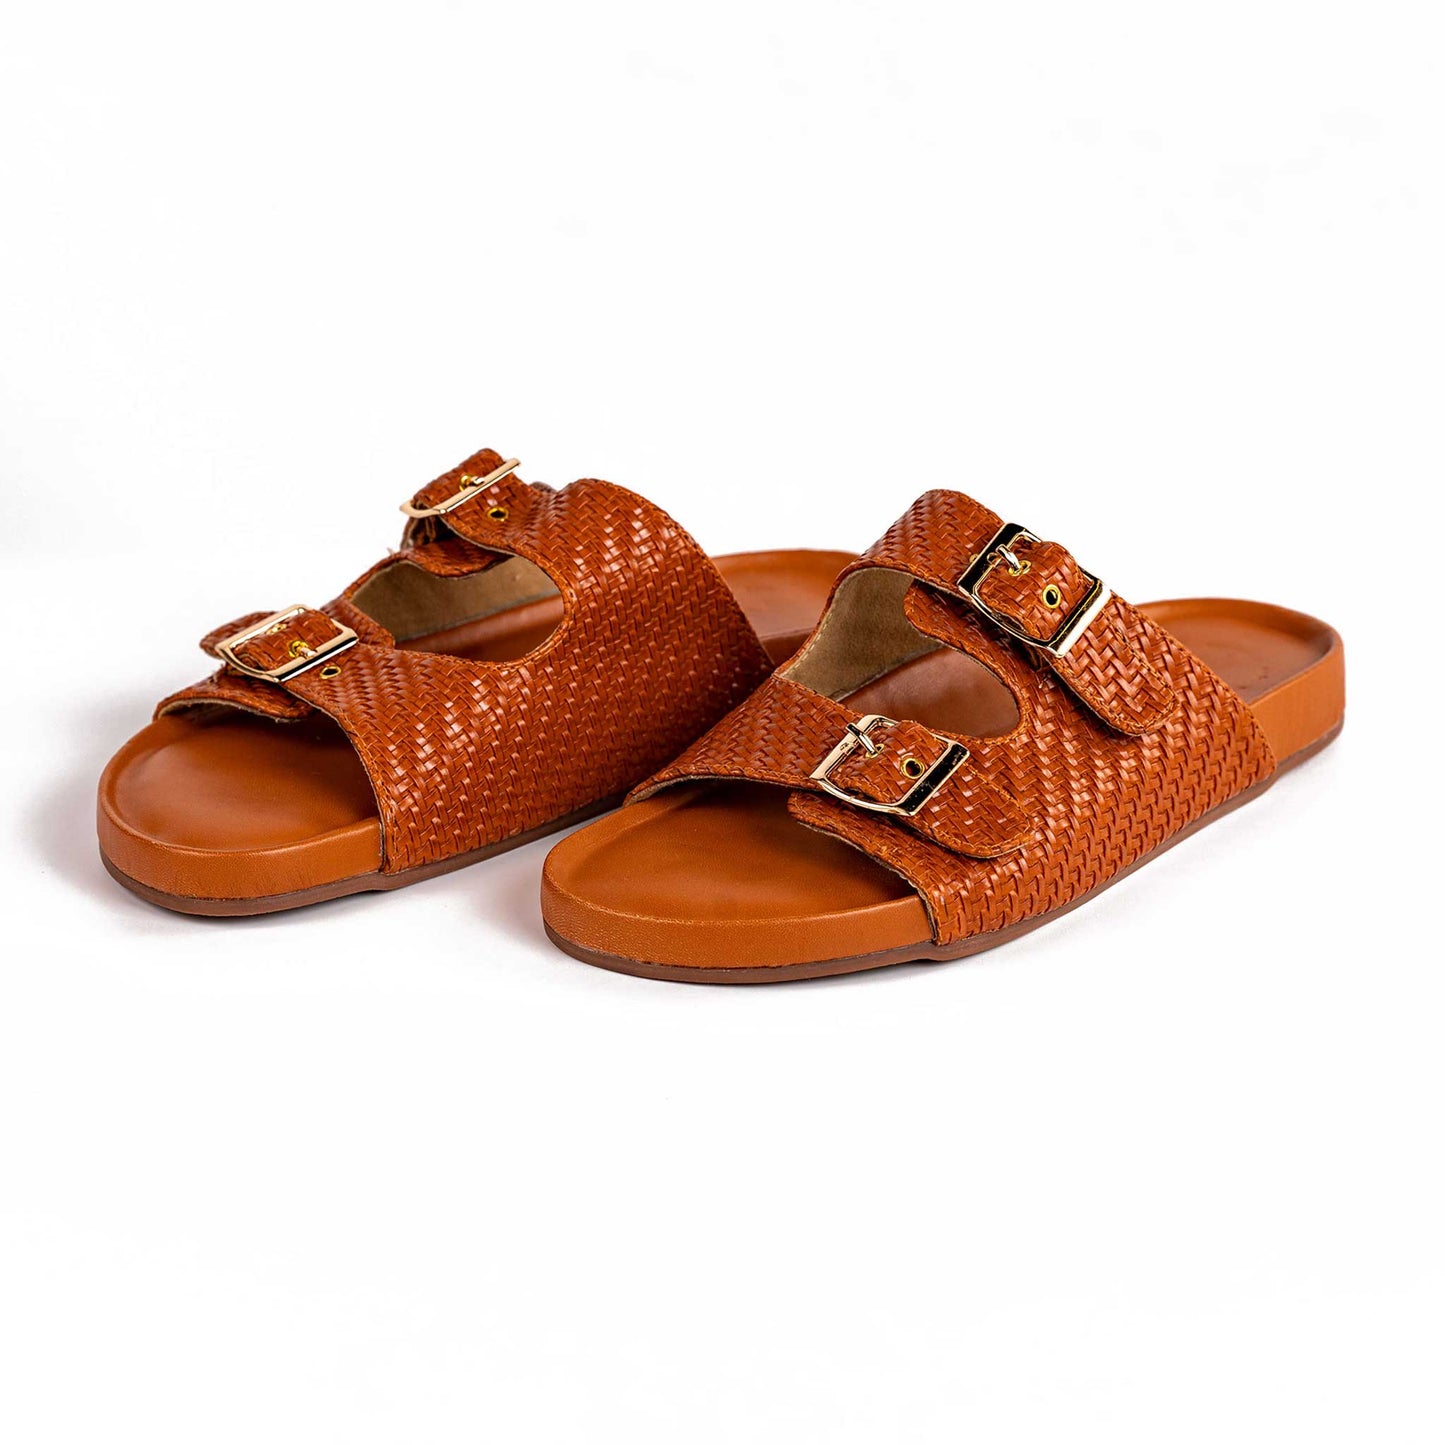 Buckled Cork Sandals-Tan Brown